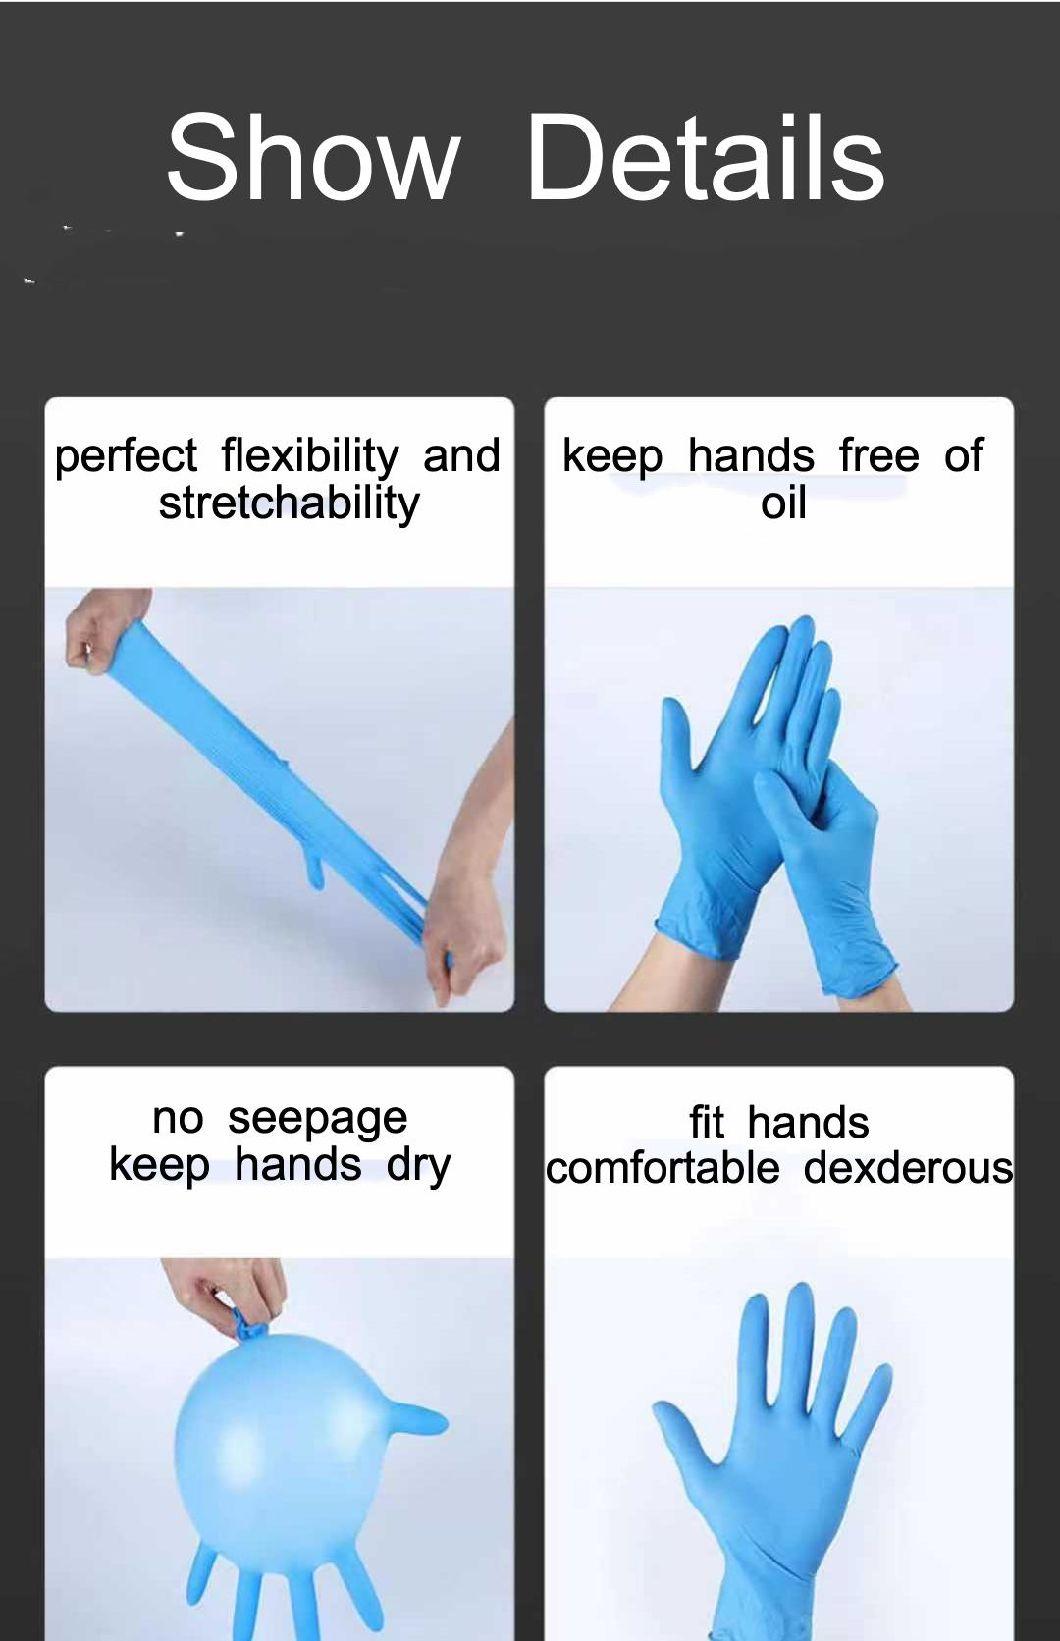 Powder Free 510K En455 Disposable Nitrile Blend Examination Gloves